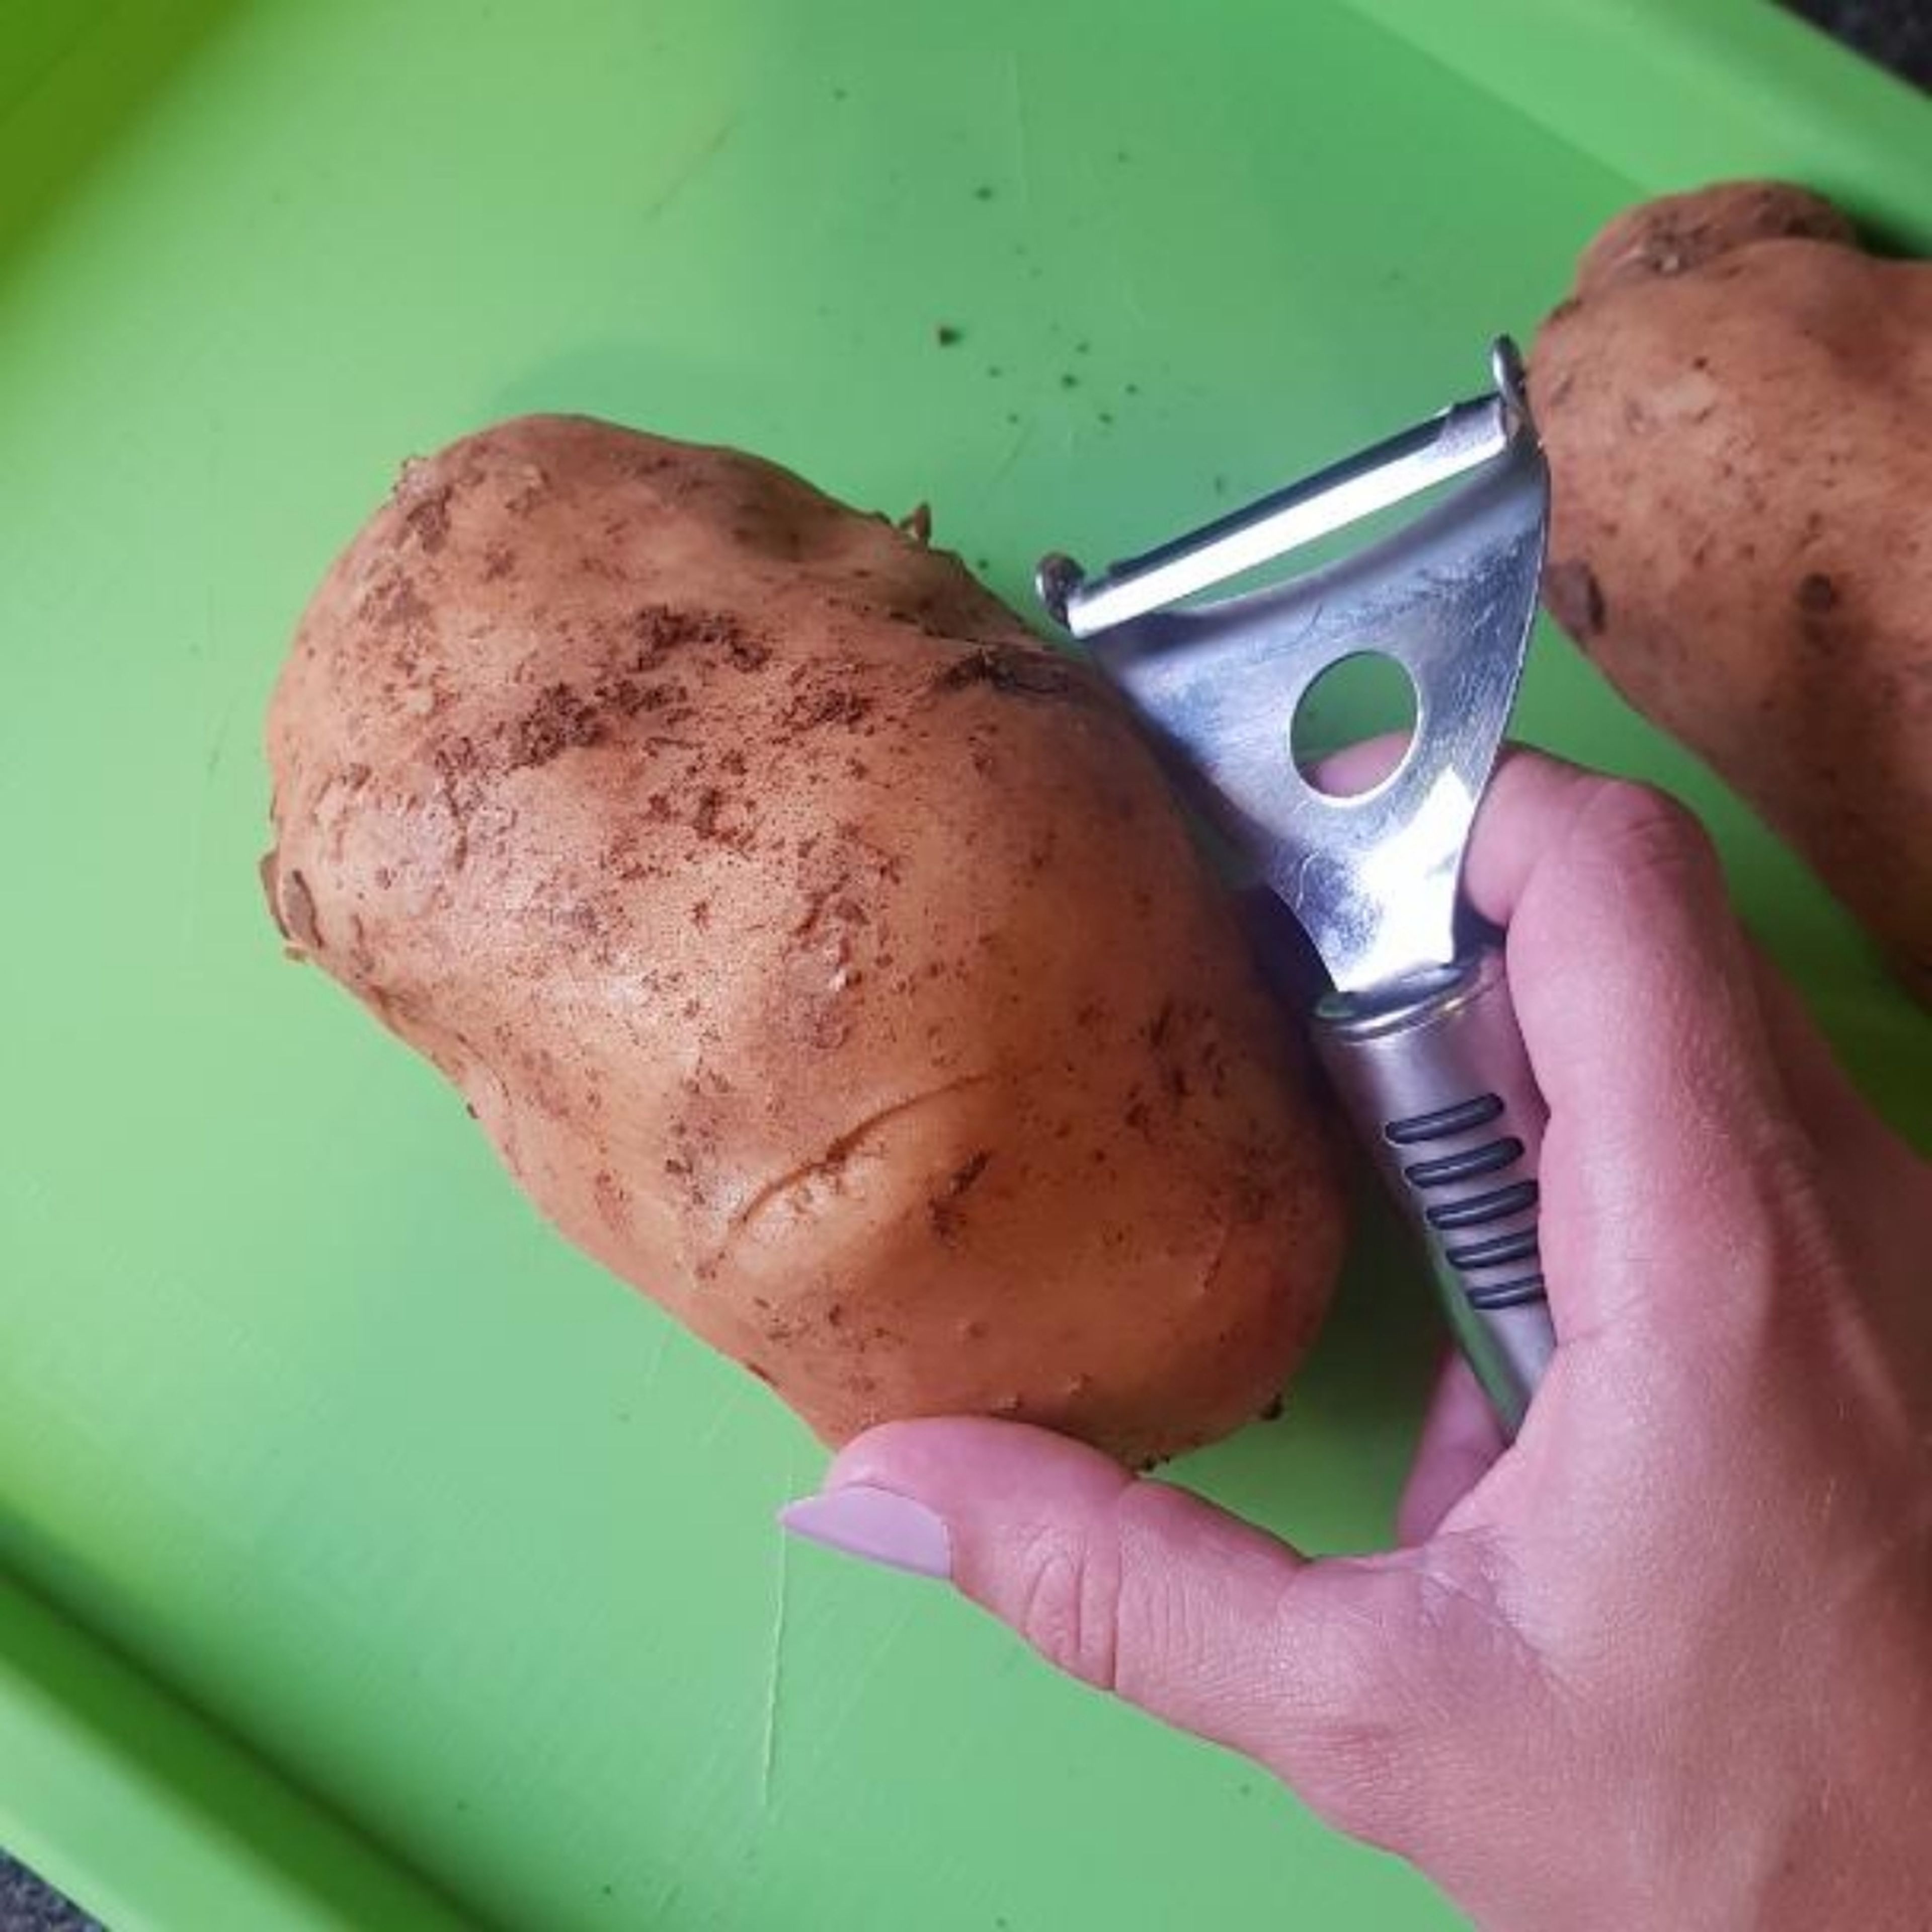 peel the potatoes